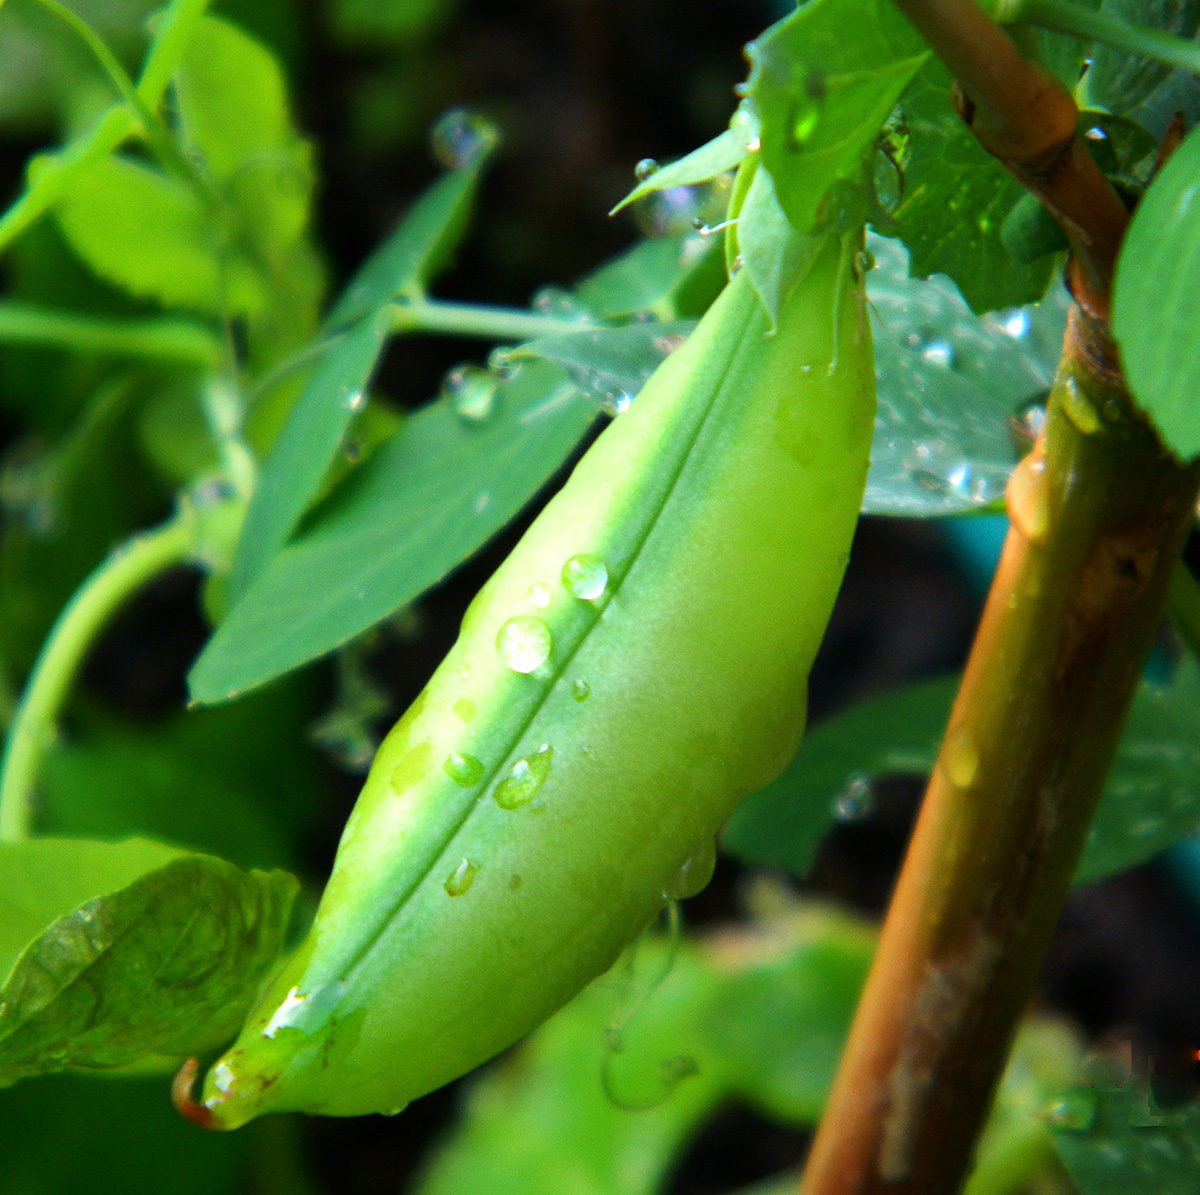 Image of garden peas.